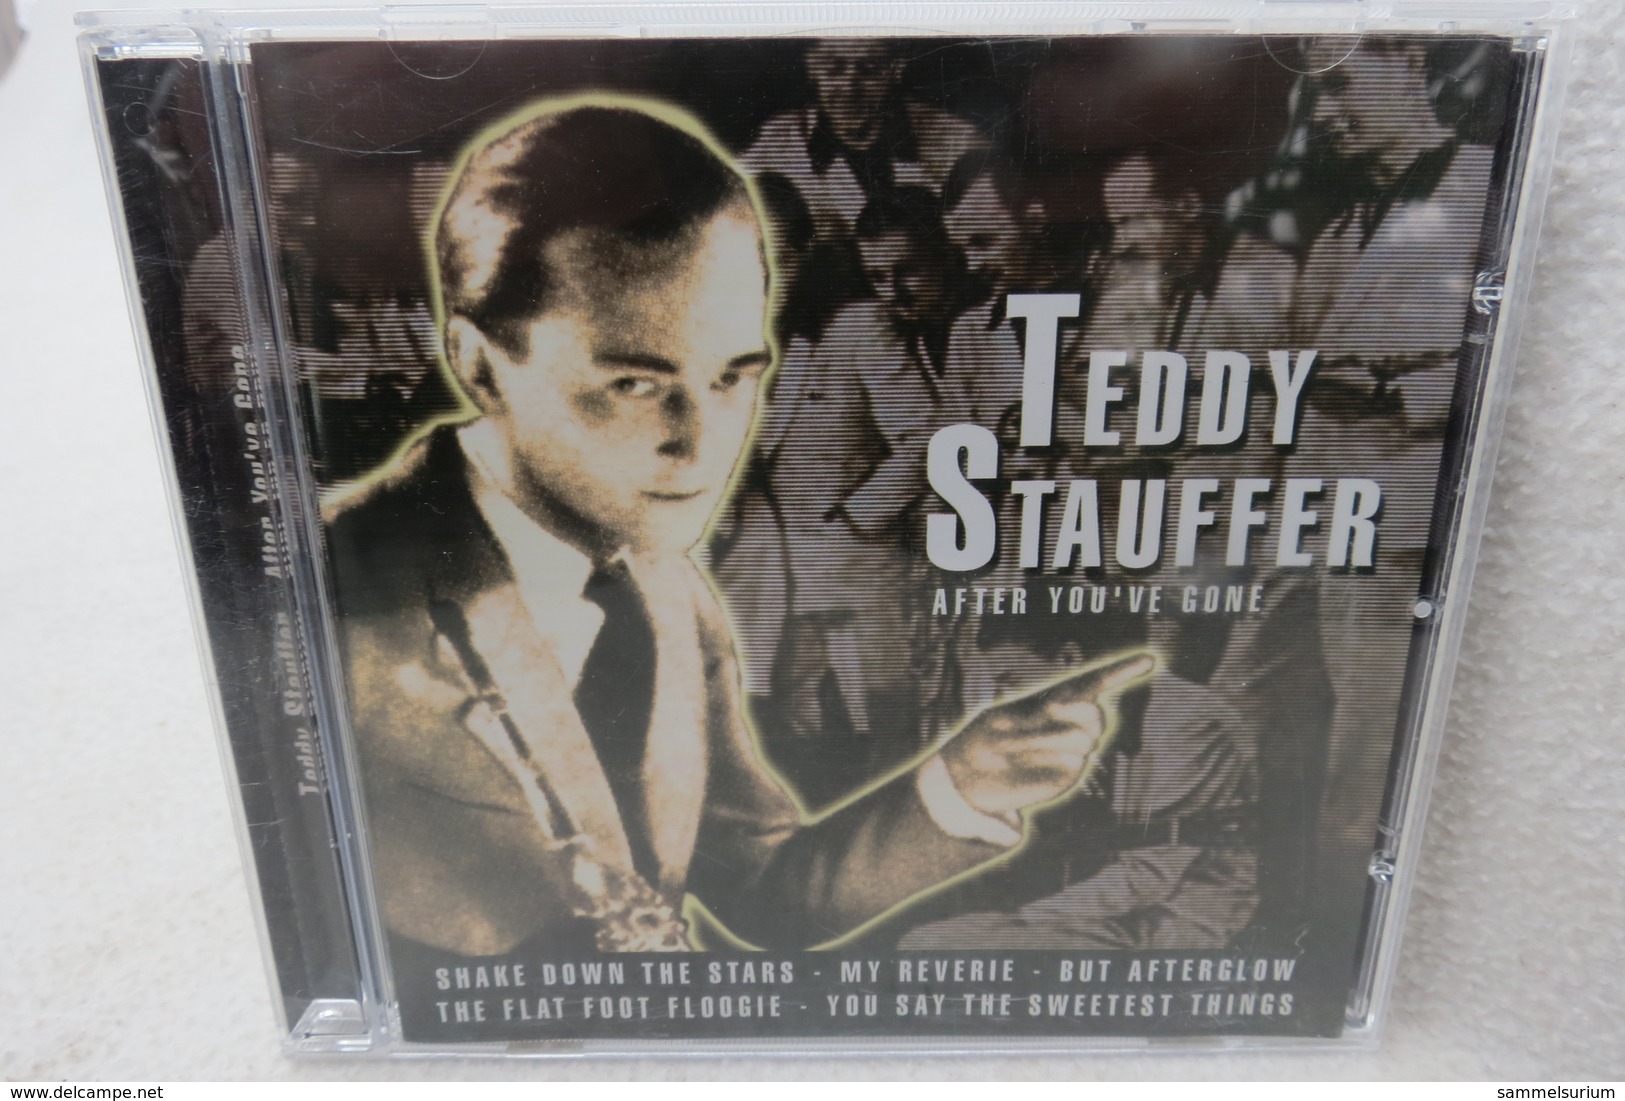 4 CD-Set "Teddy Stauffer and the original Teddies"